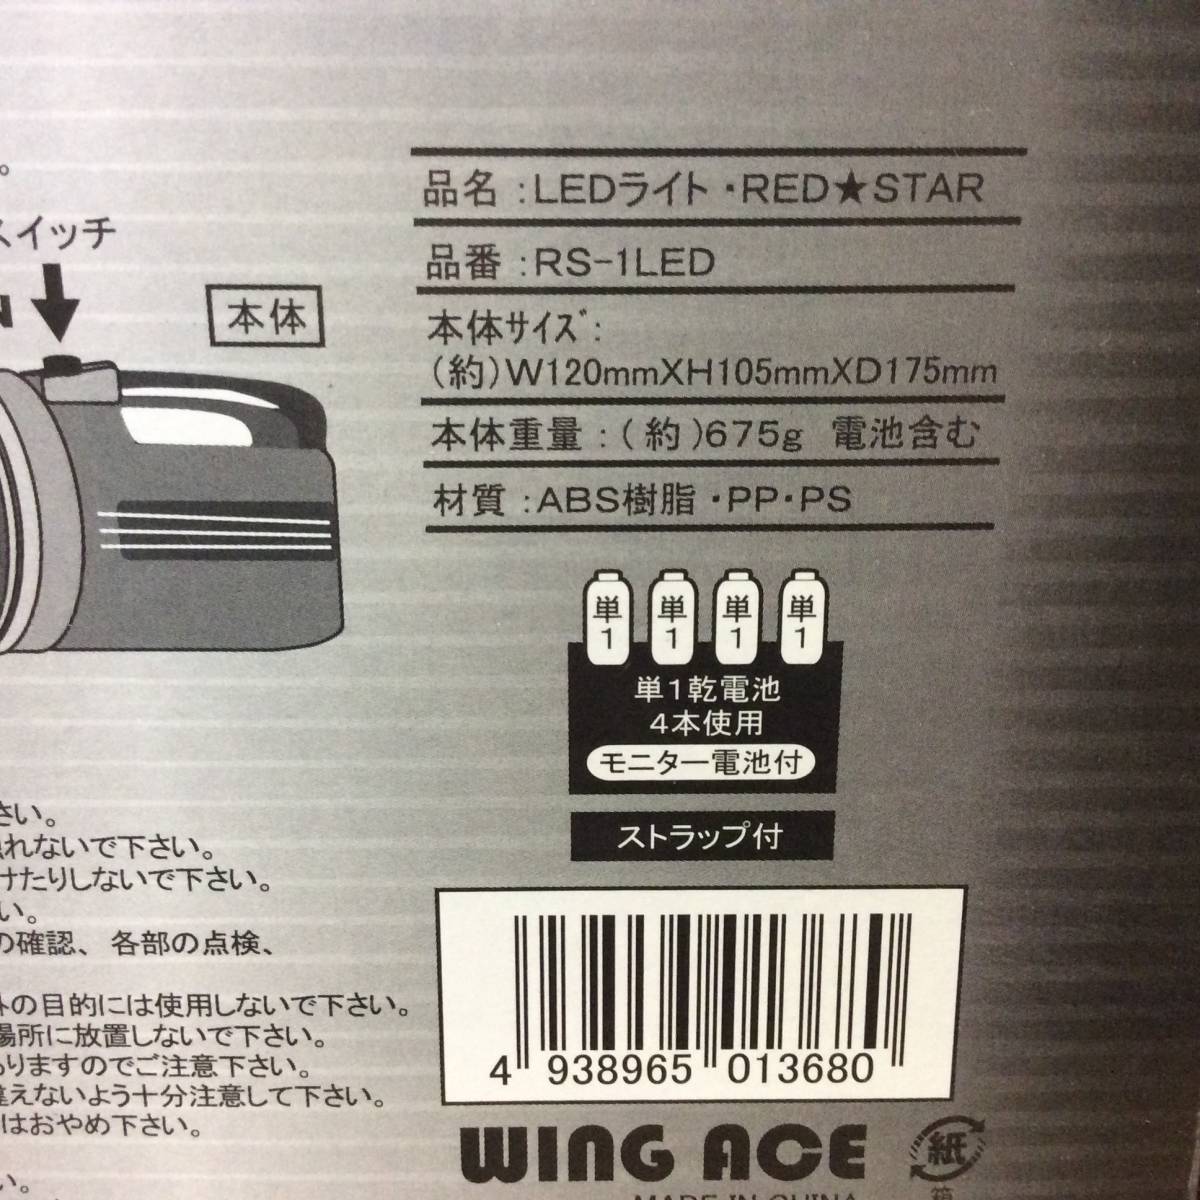 【TH-0821】未使用 WING ACE LEDライト・RED★STAR RS-1LED LED1灯タイプ 防滴仕様 230ルーメン 160m 2個セット_画像2